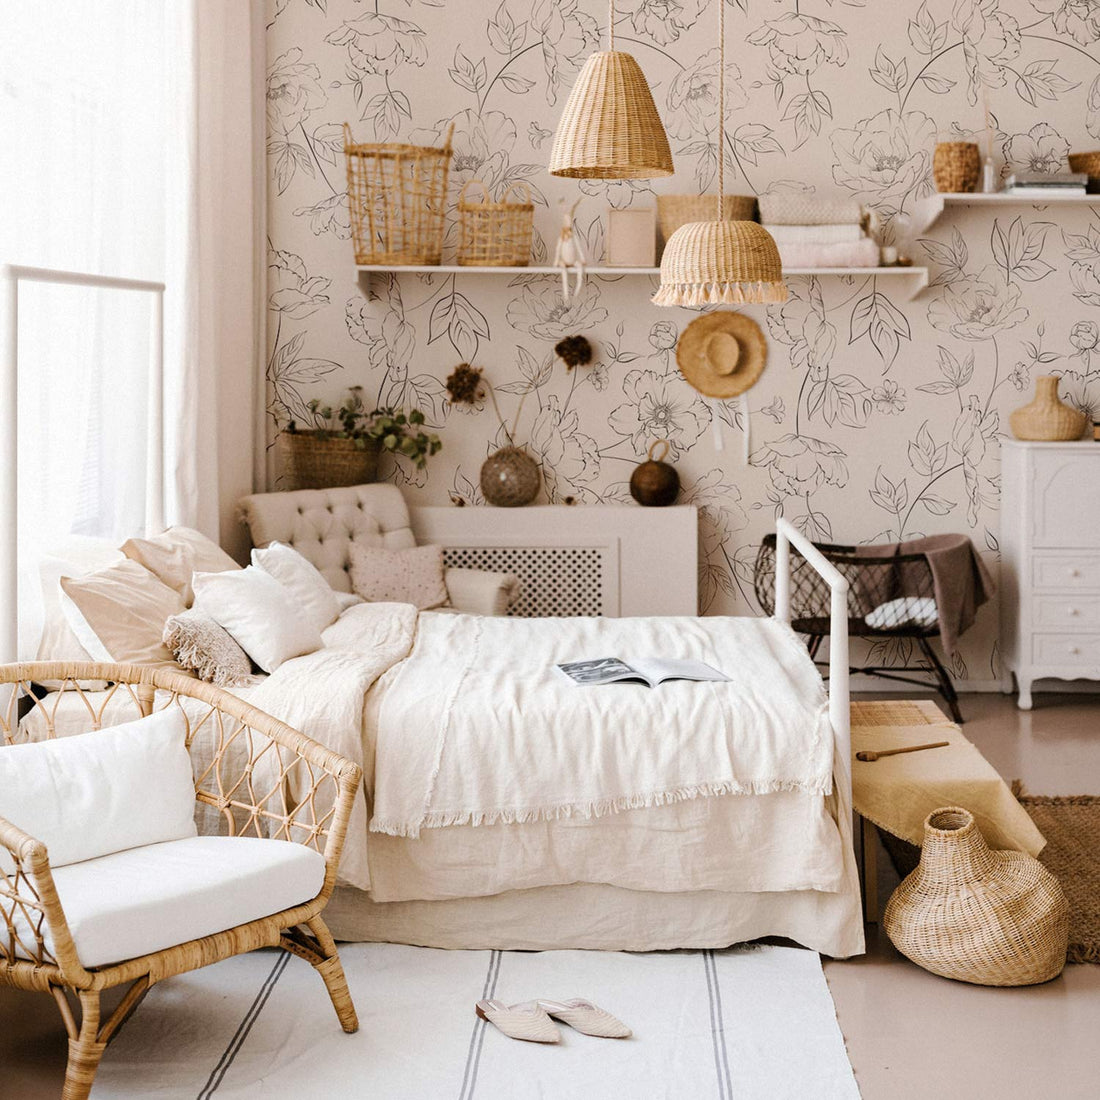 Delicate floral design removable wallpaper in bohemian bedroom interior